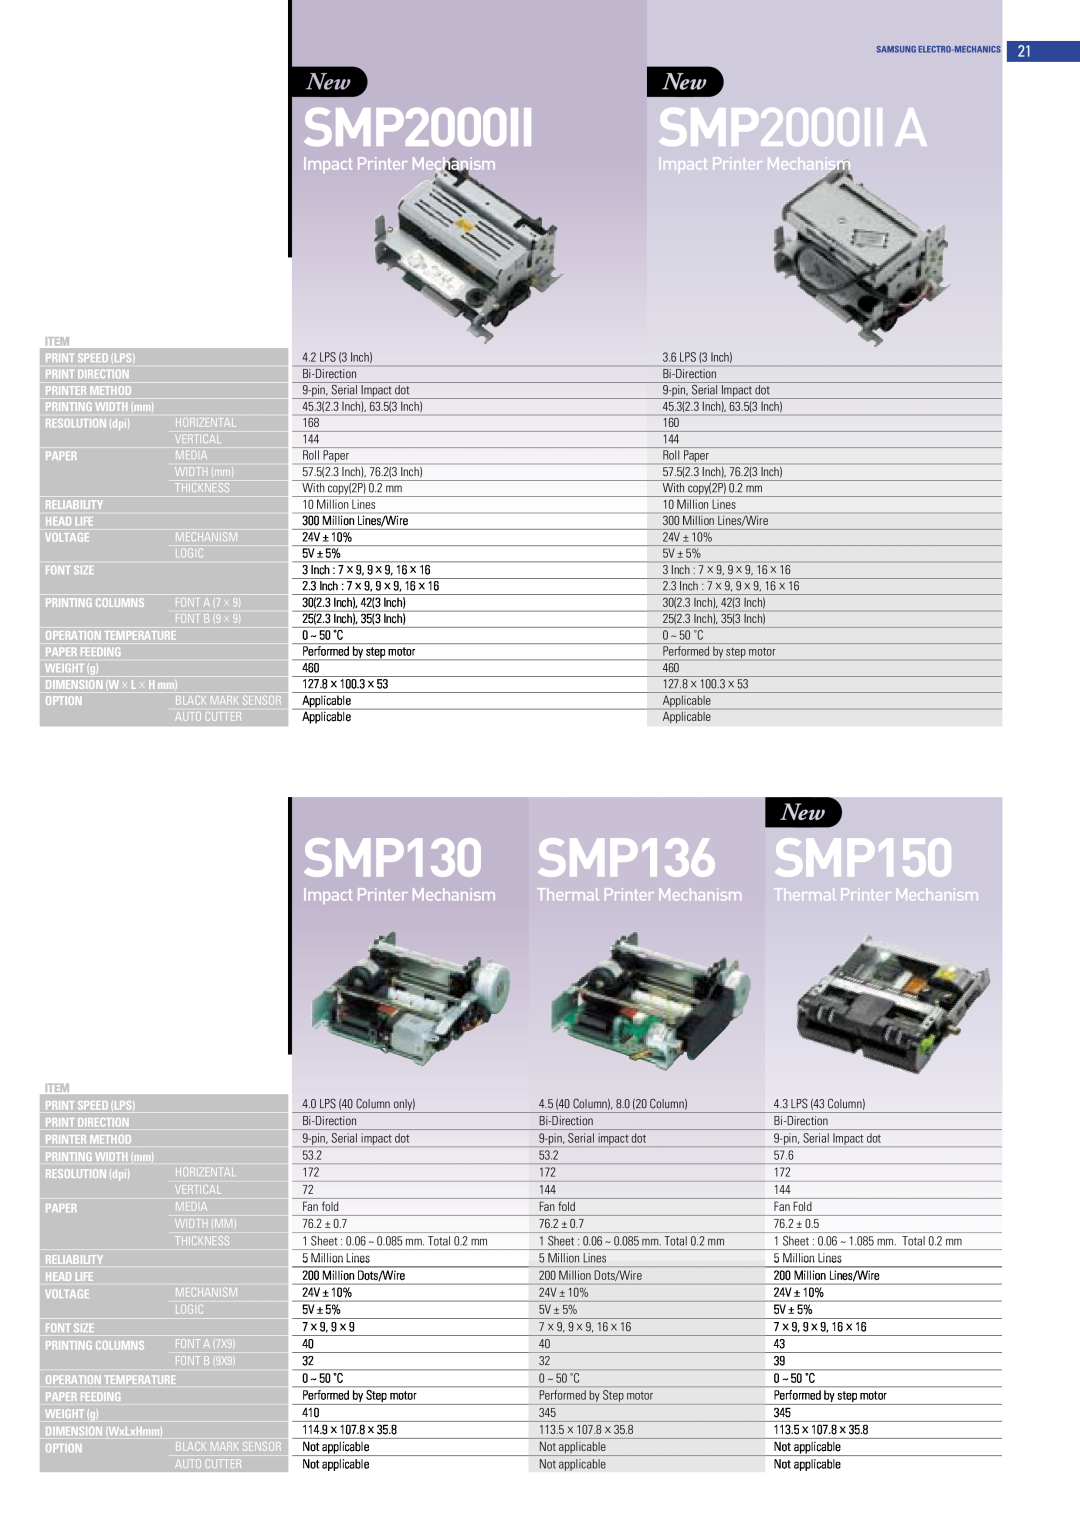 Samsung SRP-370, SRP-372, SRP-275 SMP130, SMP136, SMP150, SMP2000IIA, ImpactPrinter Mechanism, Thermal PrinterMechanism 